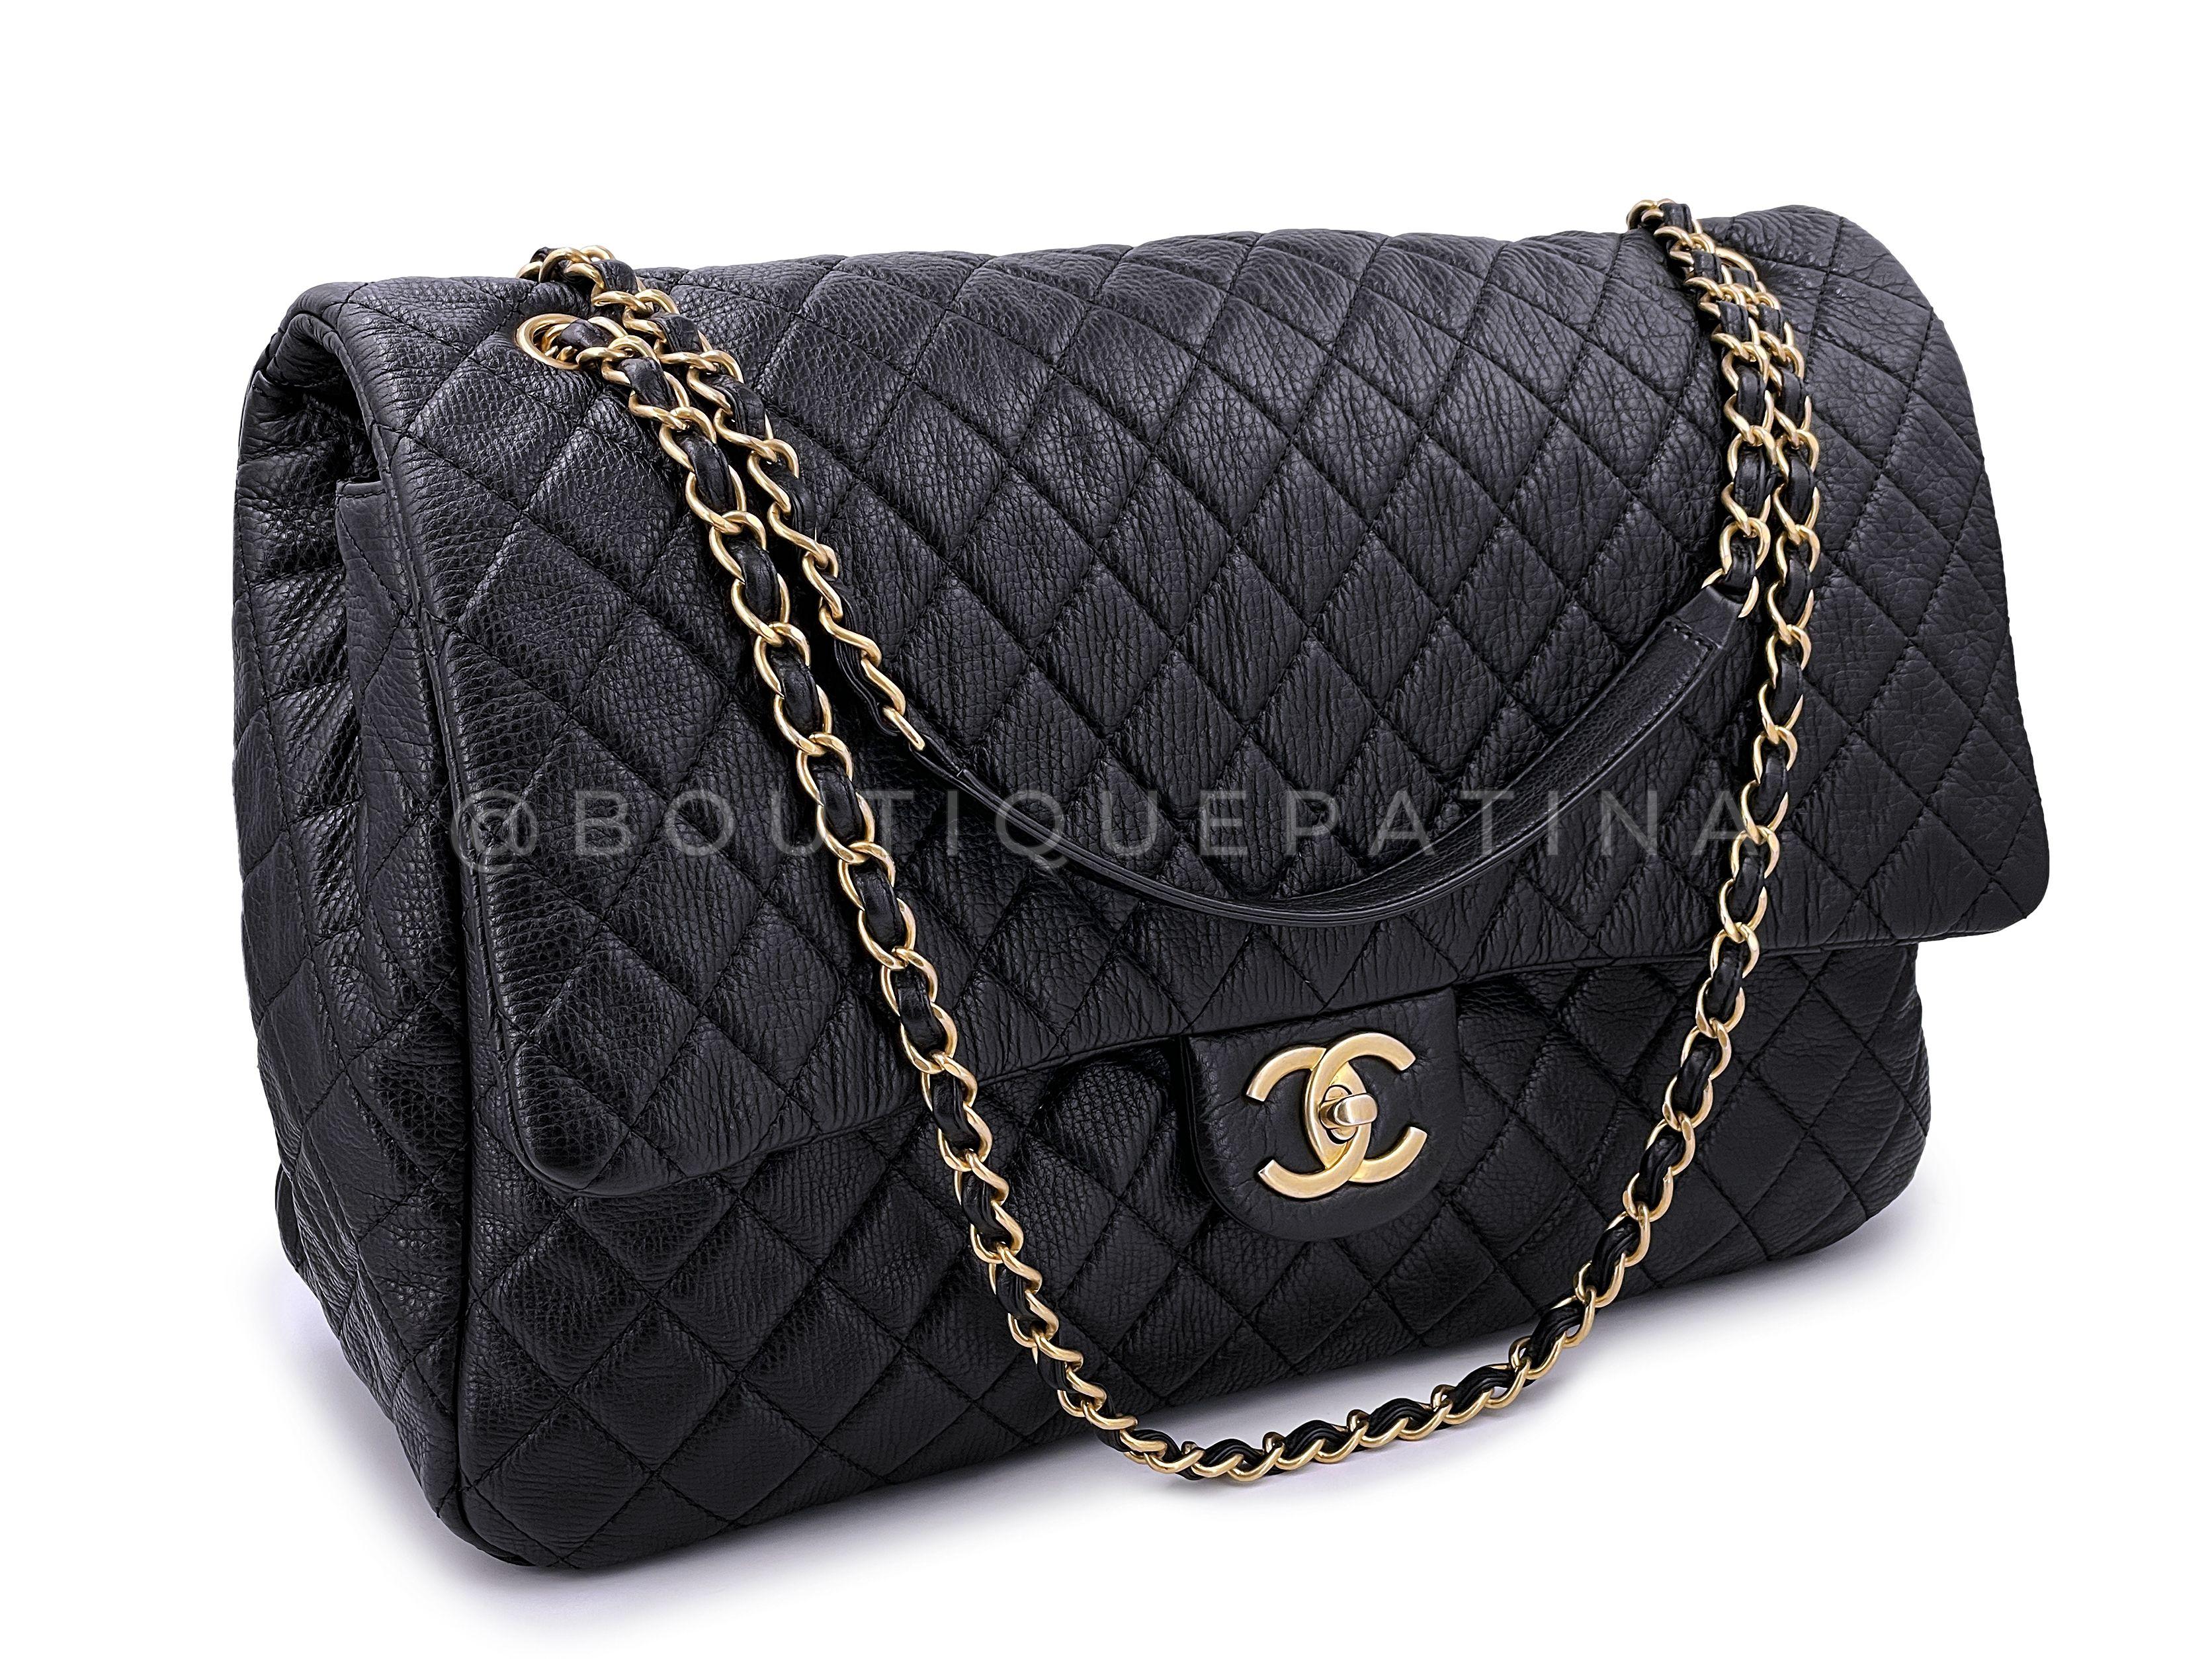 Chanel Xxl Travel Bag - 6 For Sale on 1stDibs